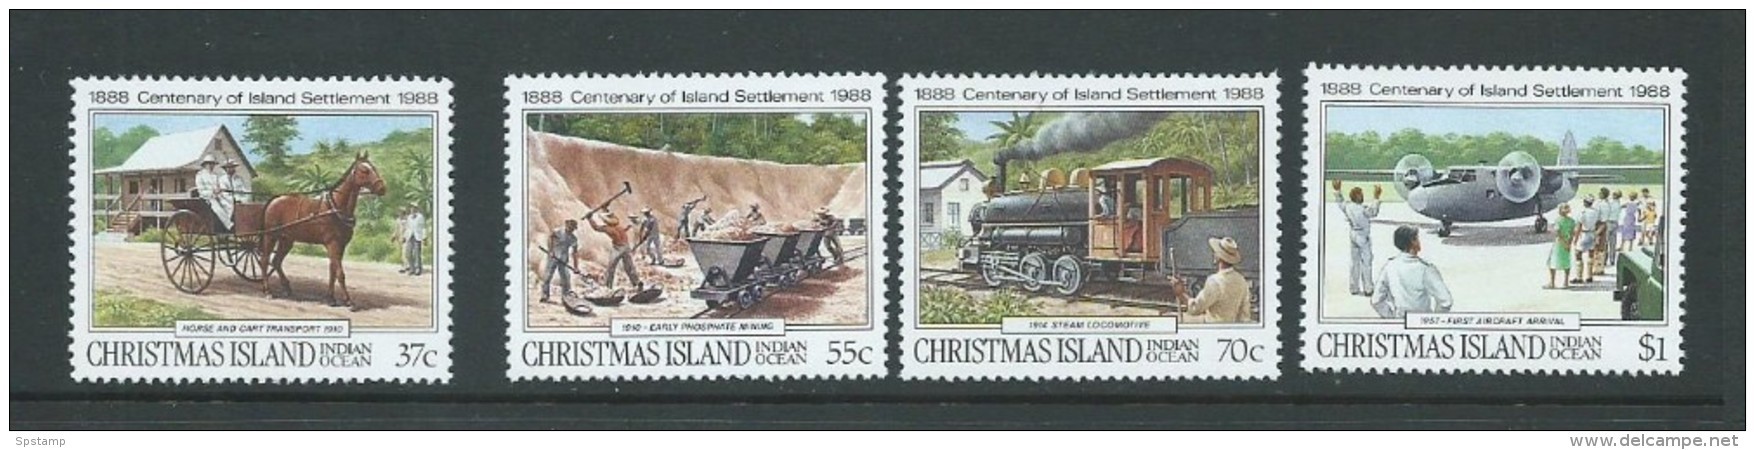 Christmas Island 1988 Settlement Centenary & Transport Set 4 MNH - Christmas Island